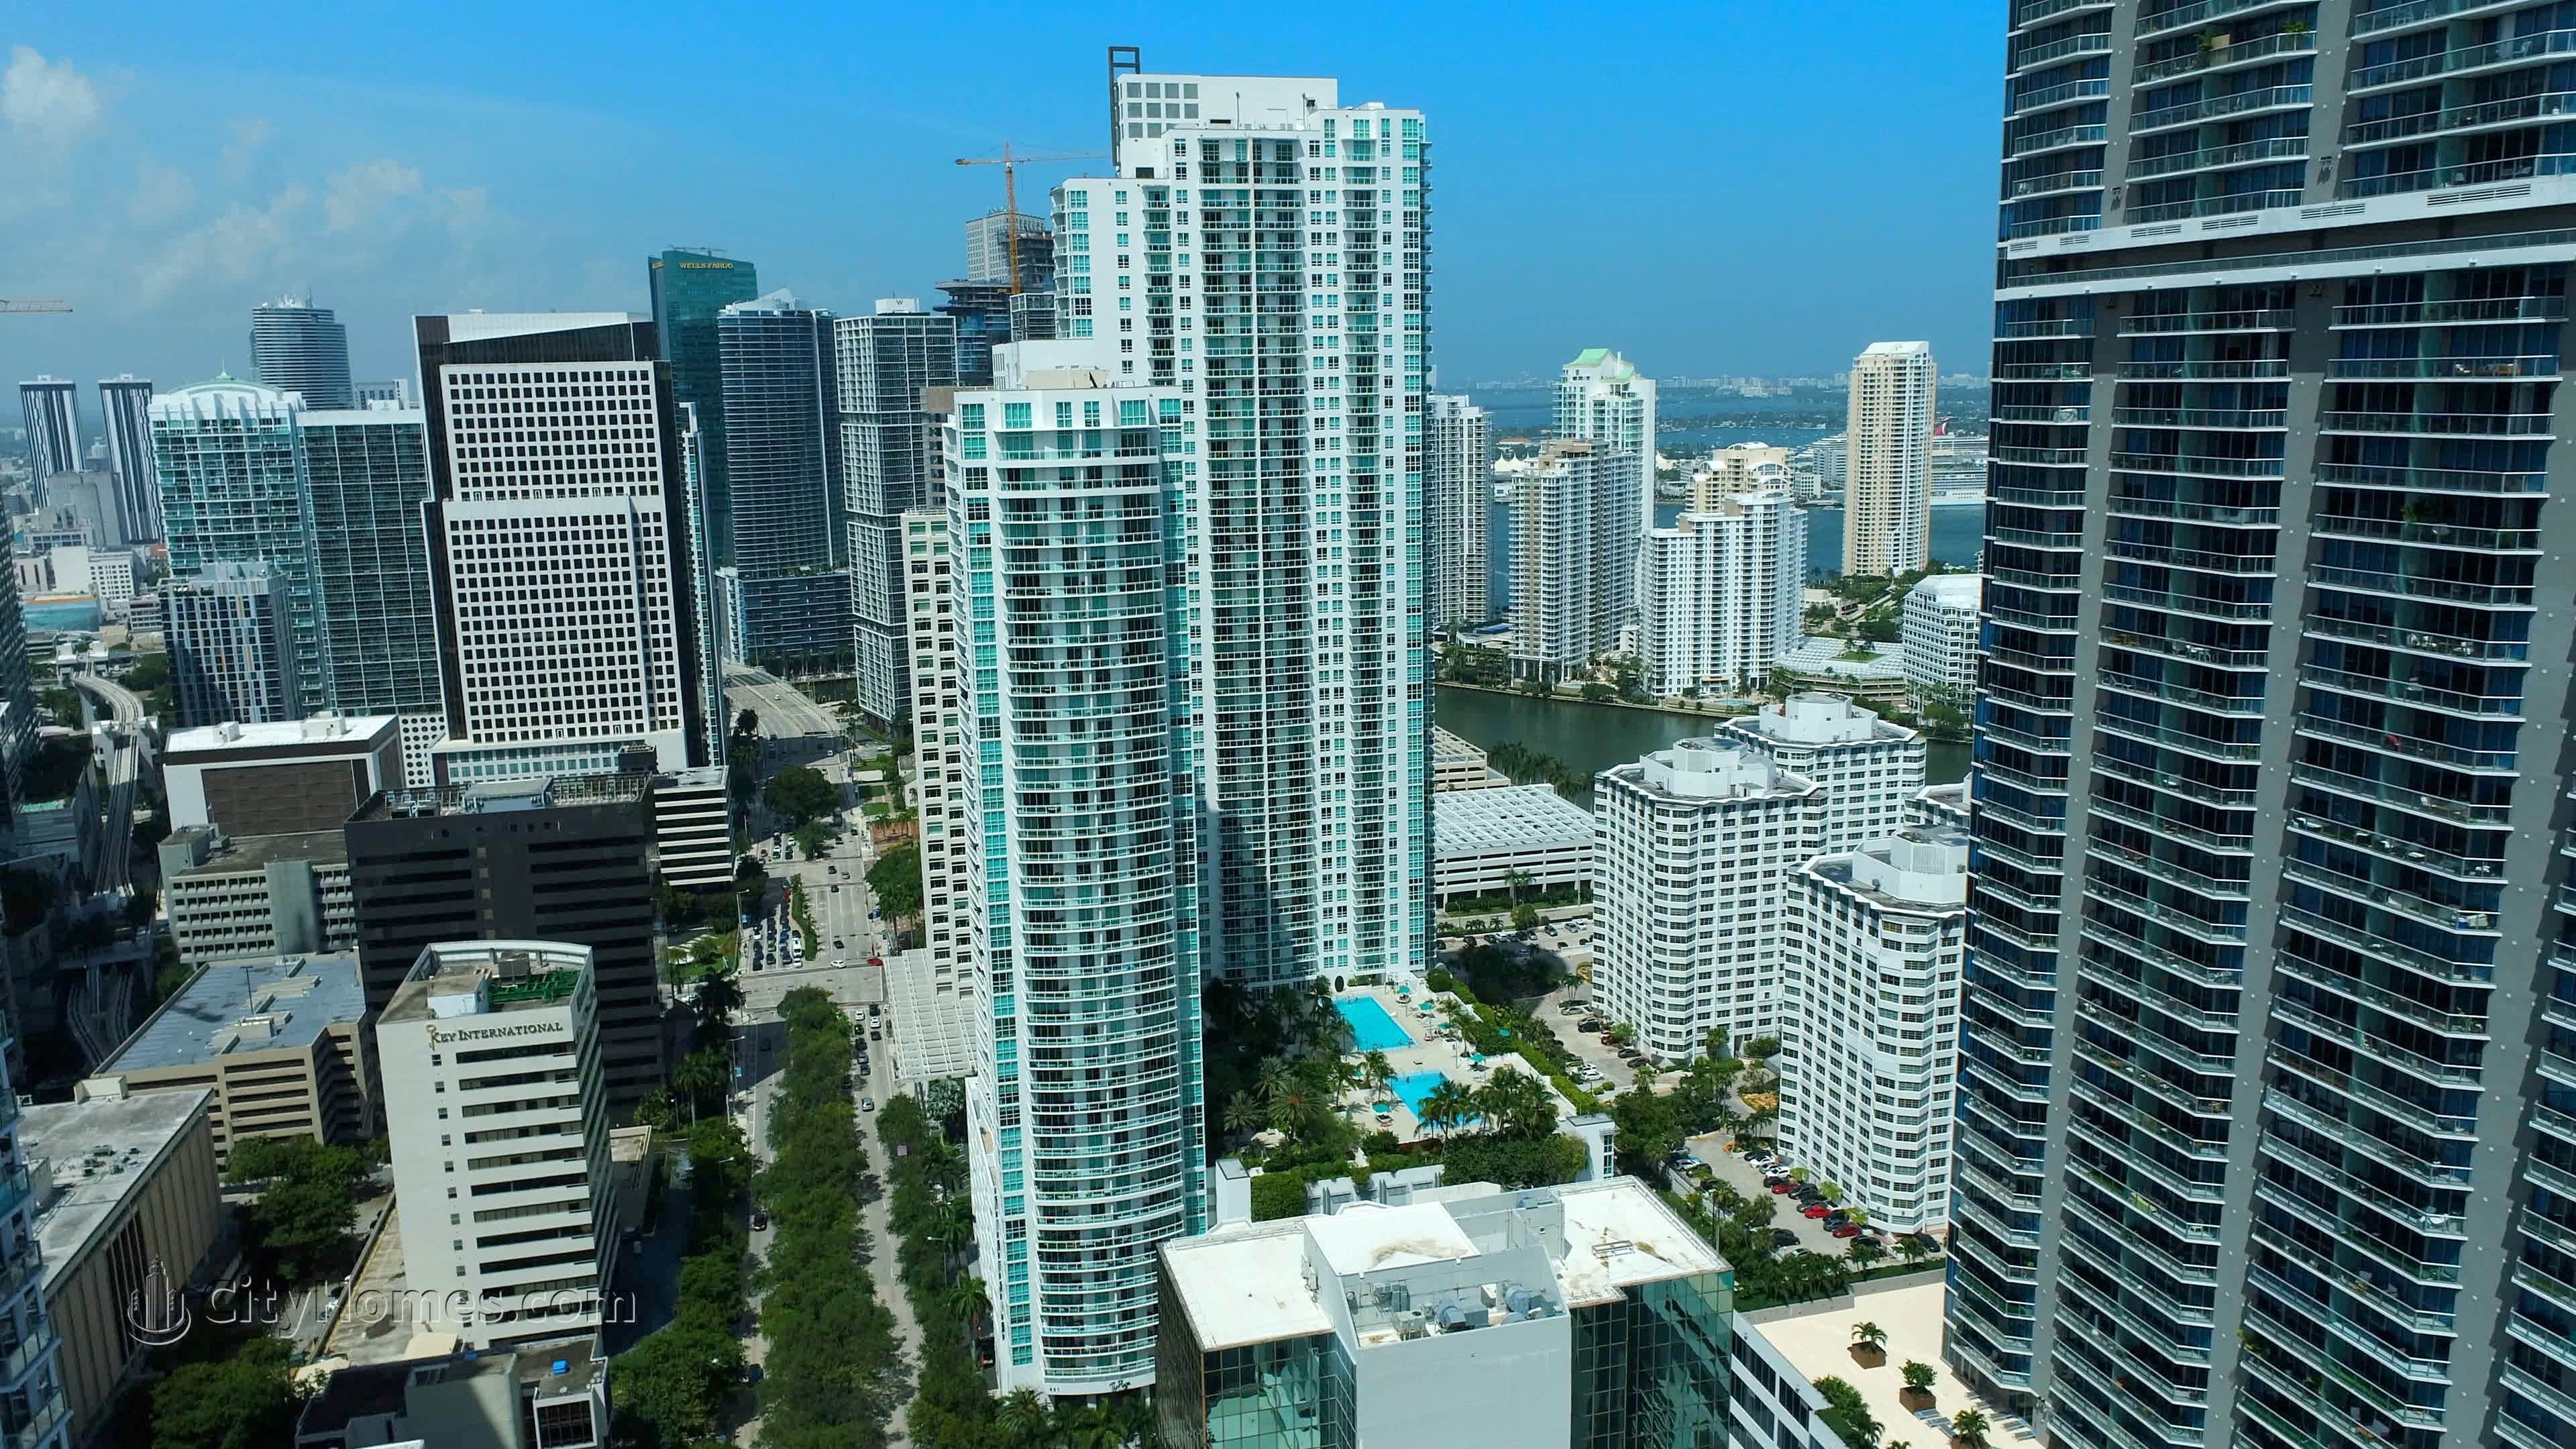 3. Plaza on Brickell - 950 Tower byggnad vid 950 Brickell Bay Drive Avenue, Miami, FL 33131